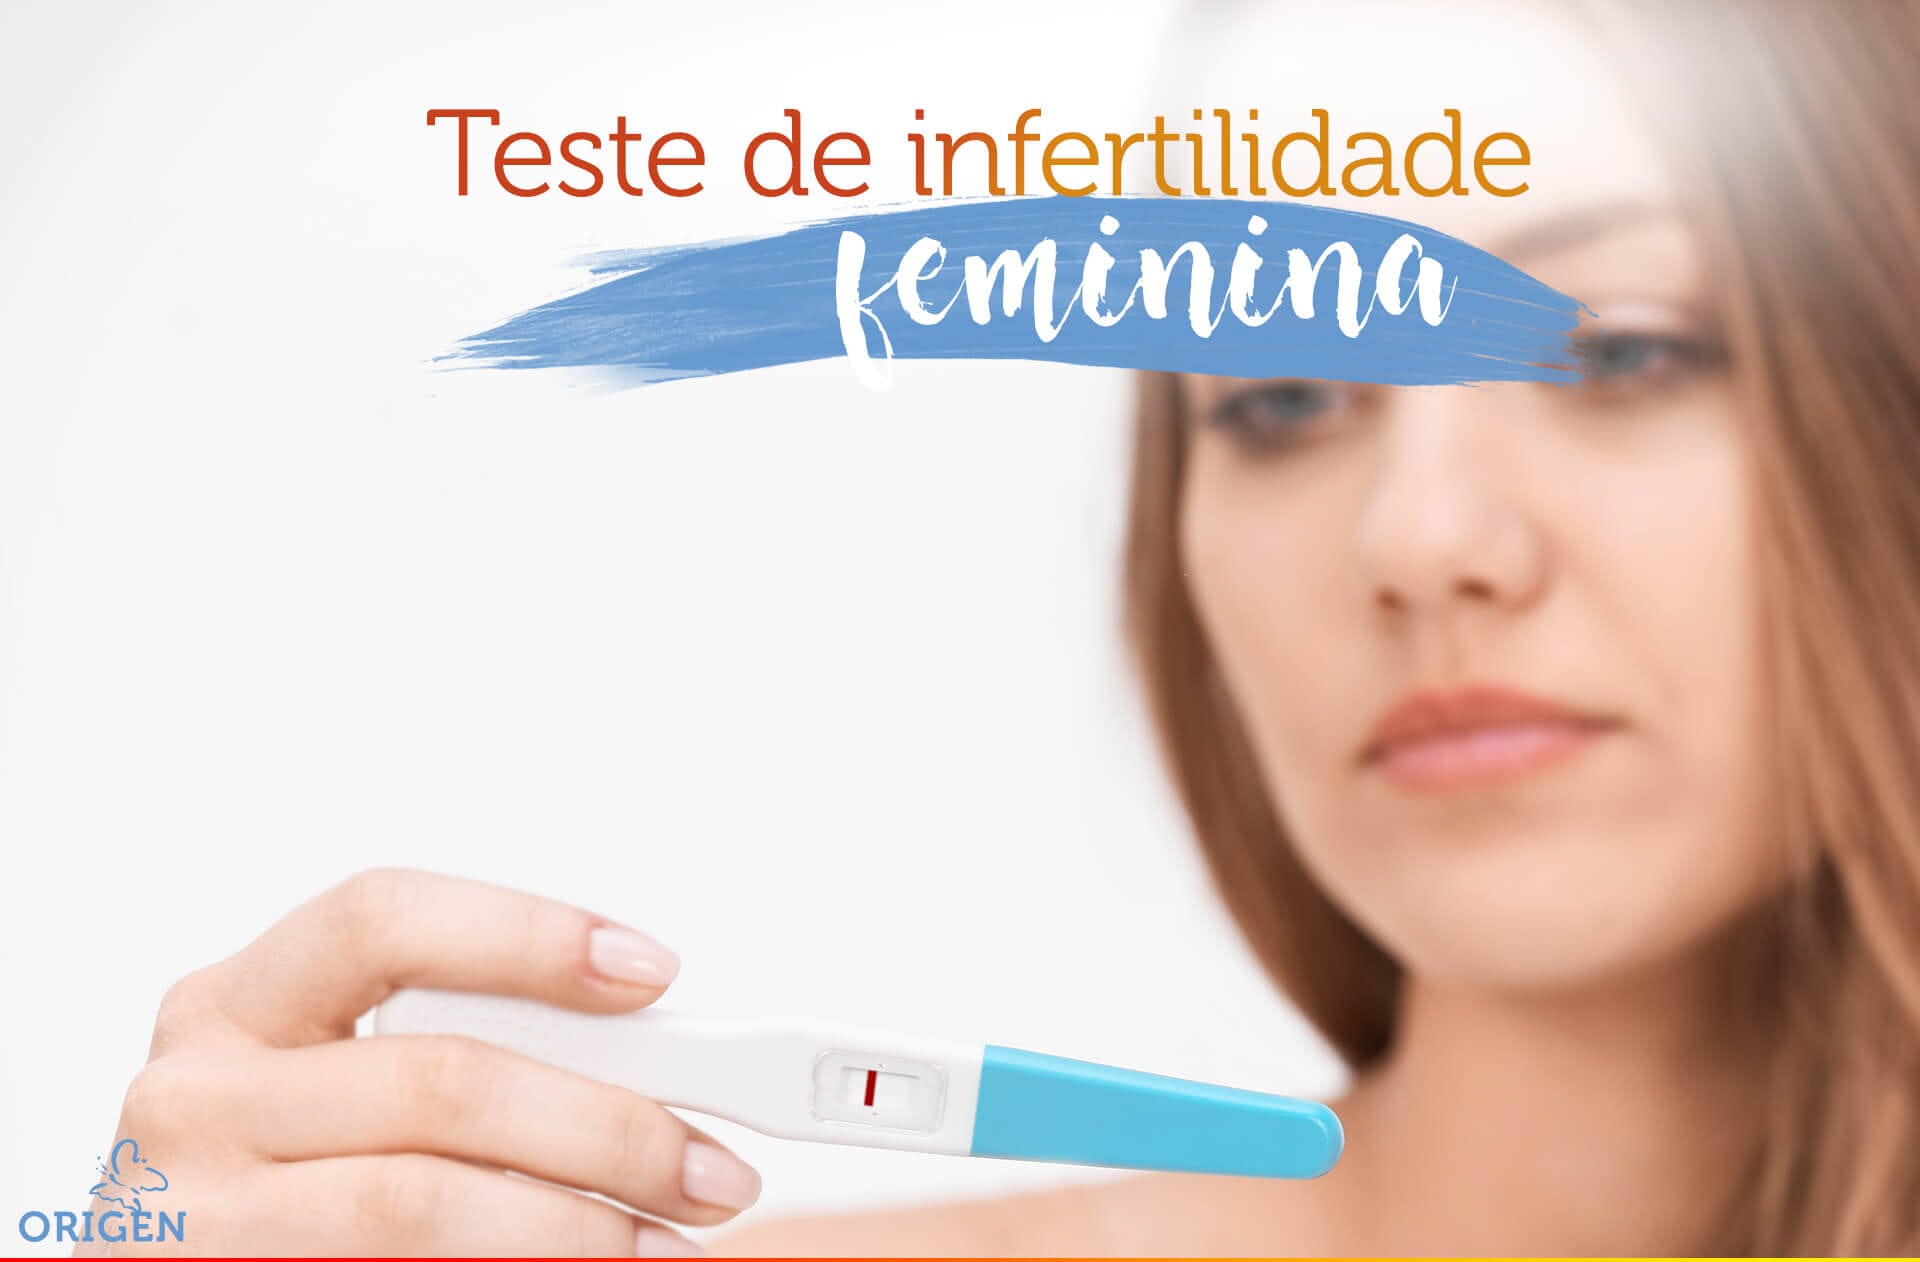 Teste de infertilidade feminina: como devo investigá-la?